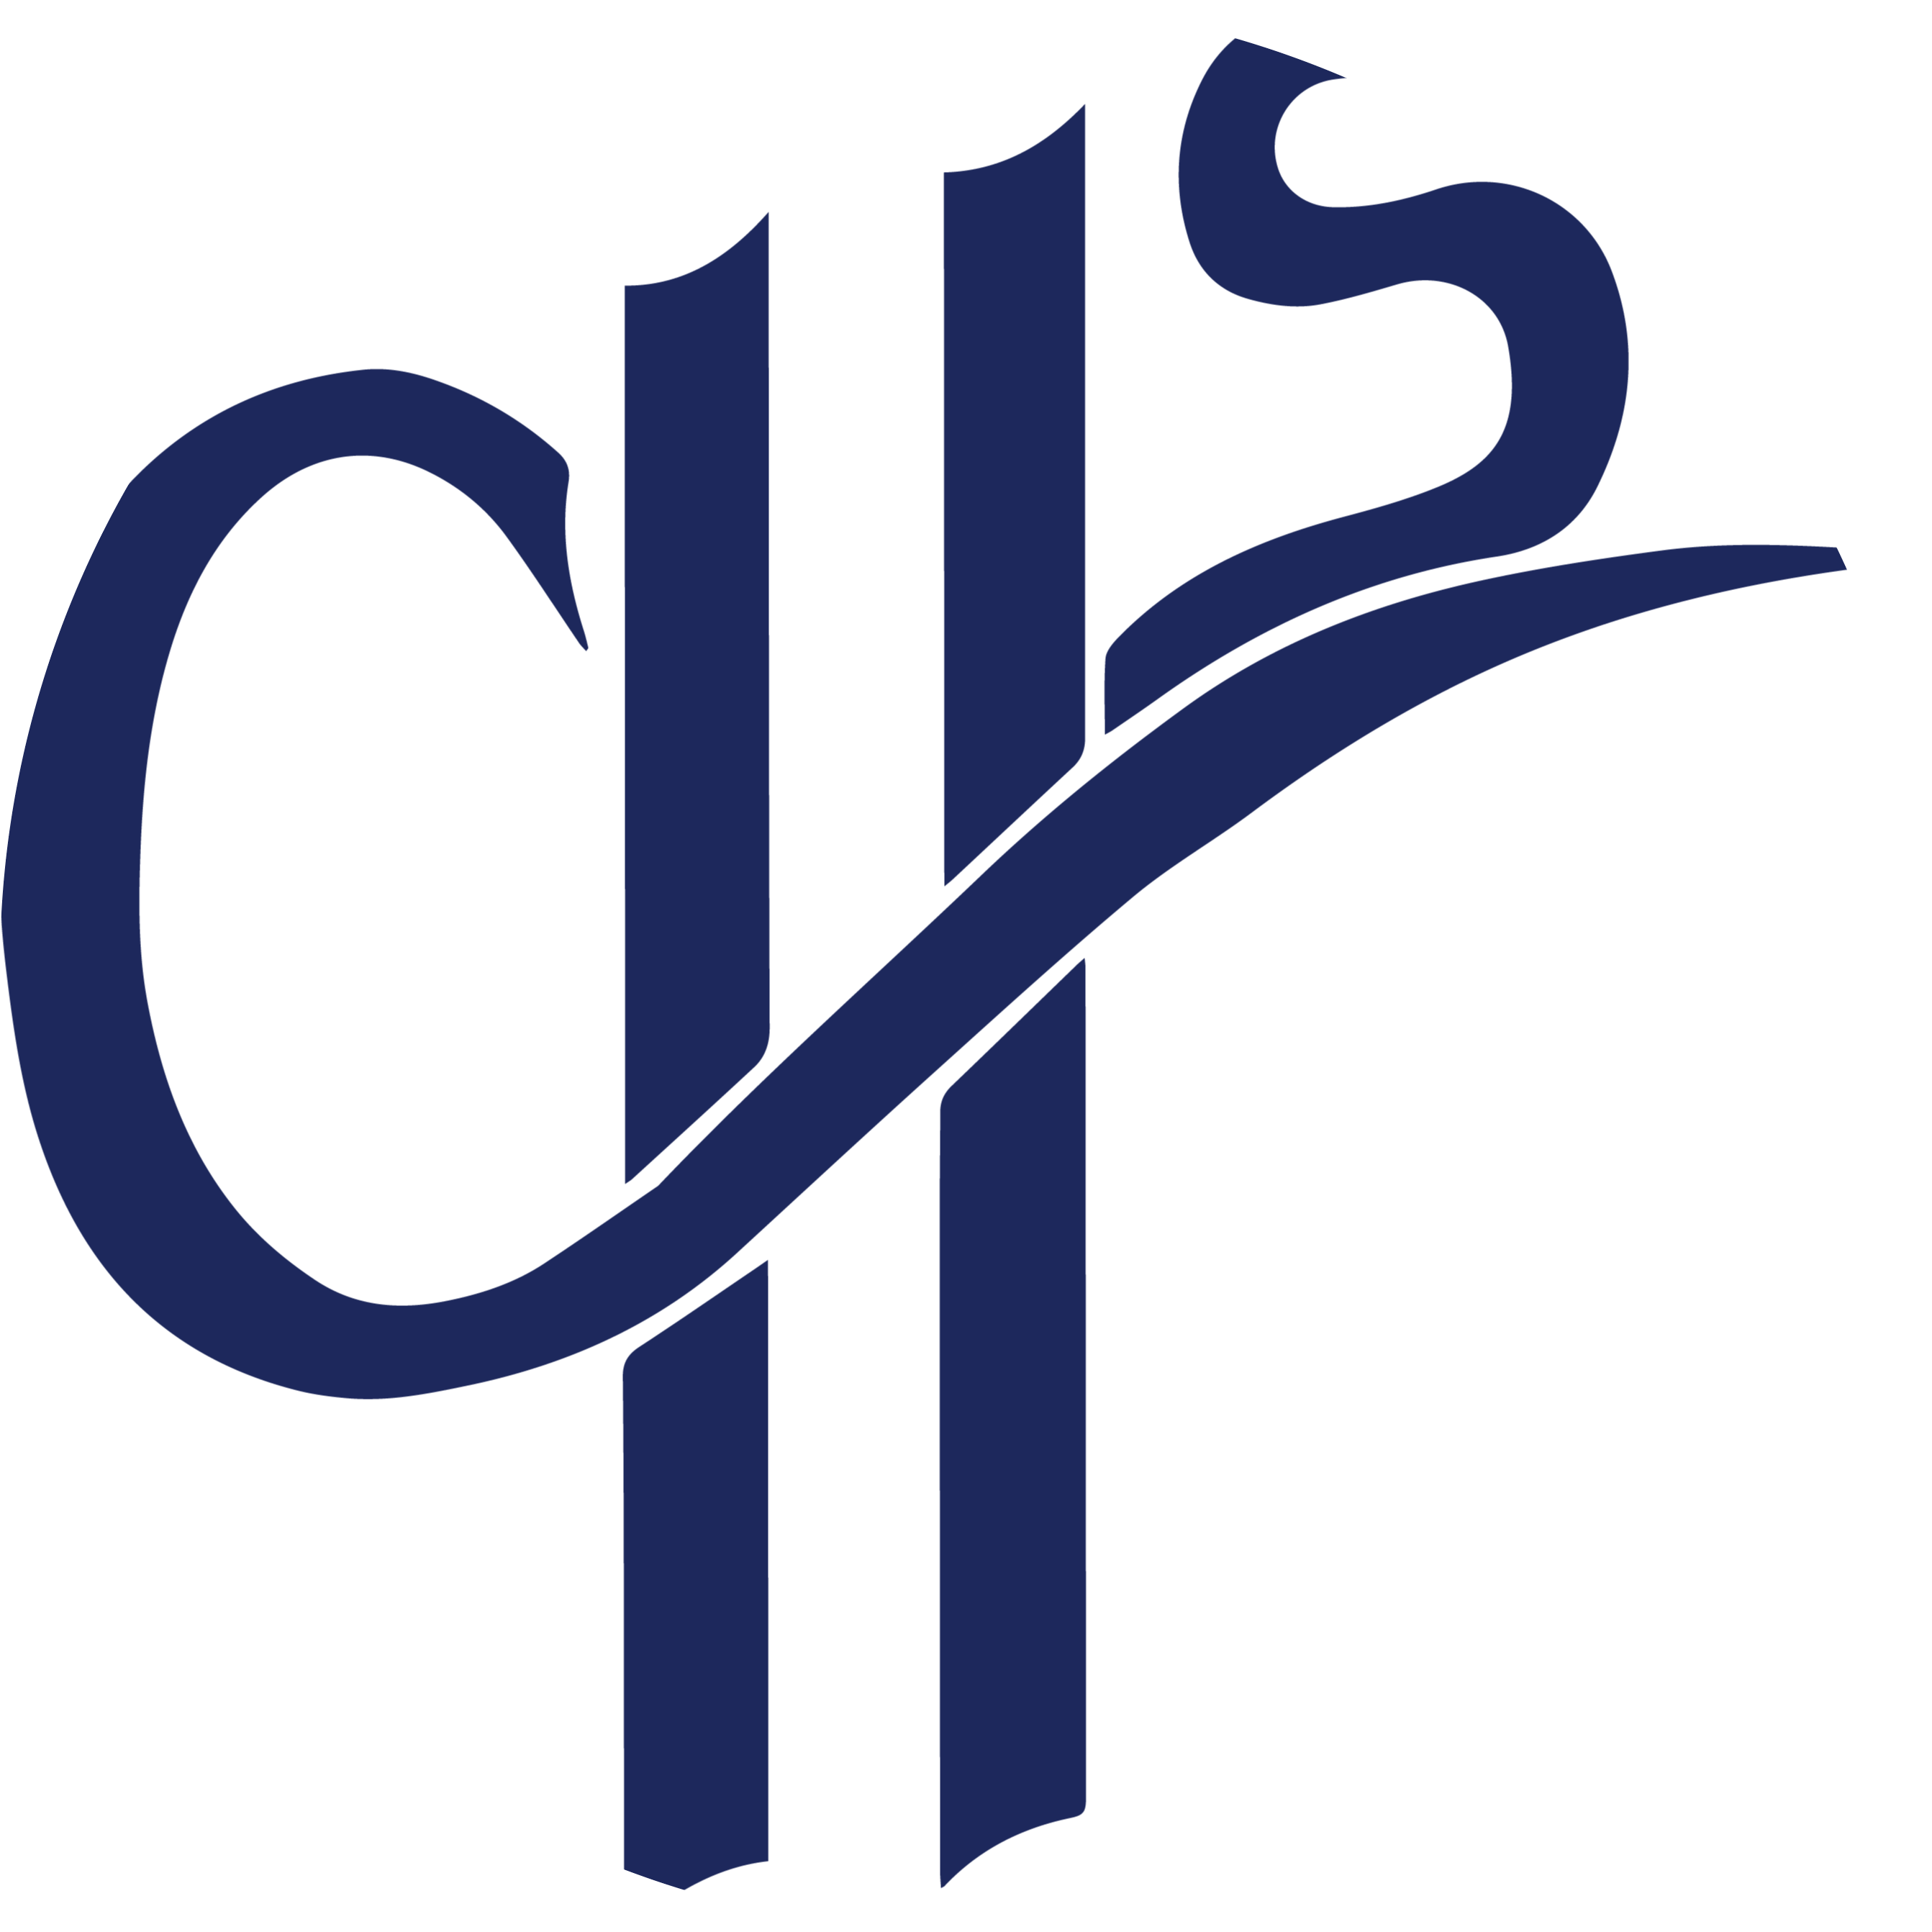 school logo